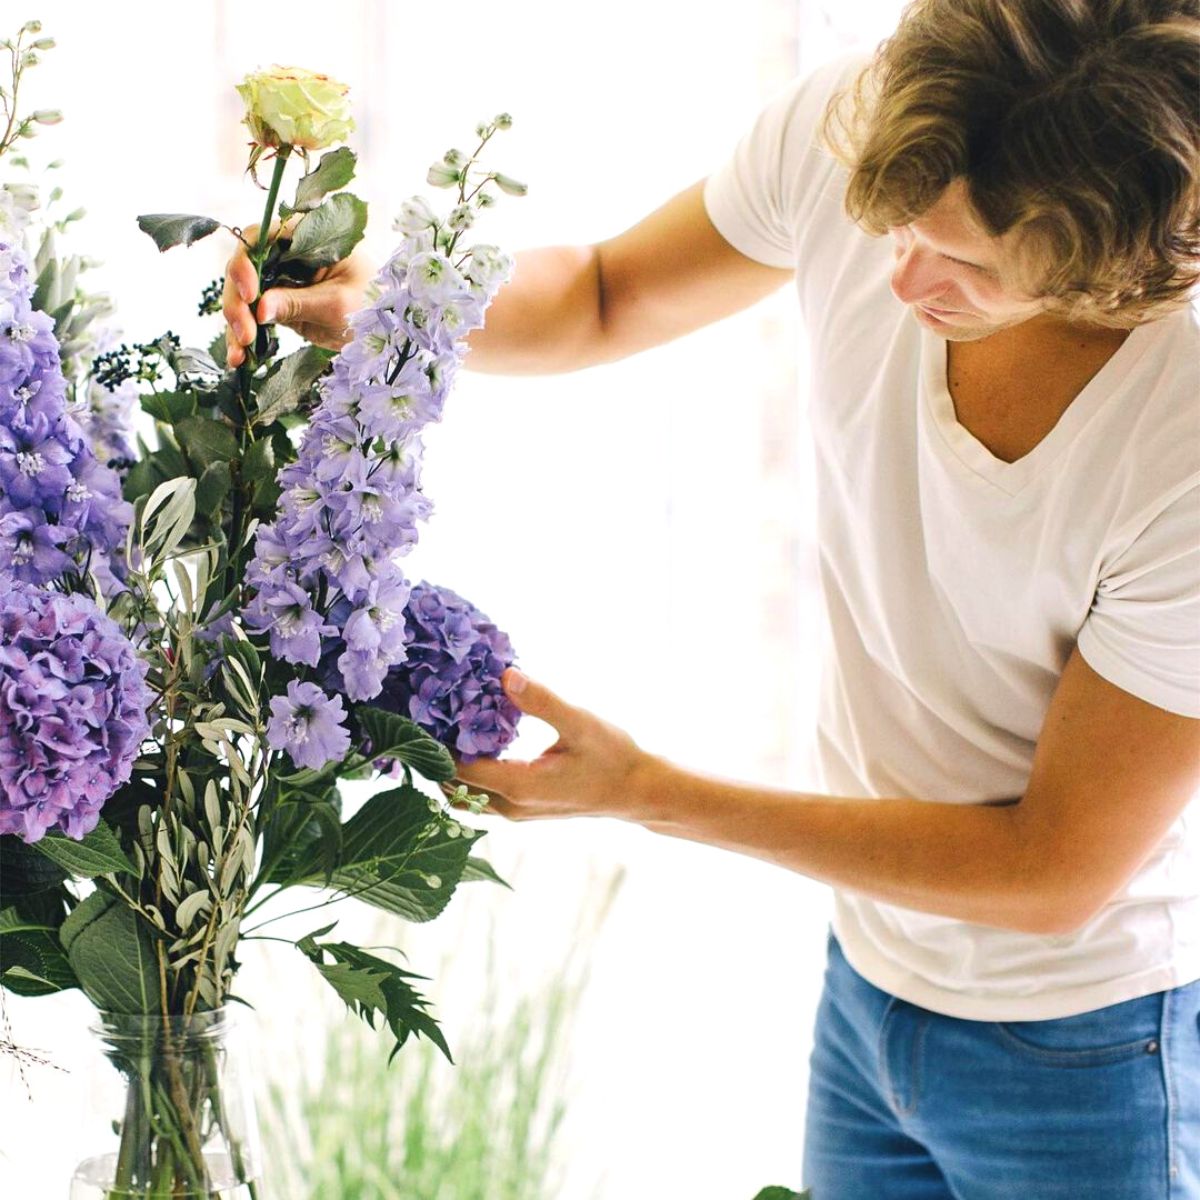 Dennis Kneepkens arranging flowers